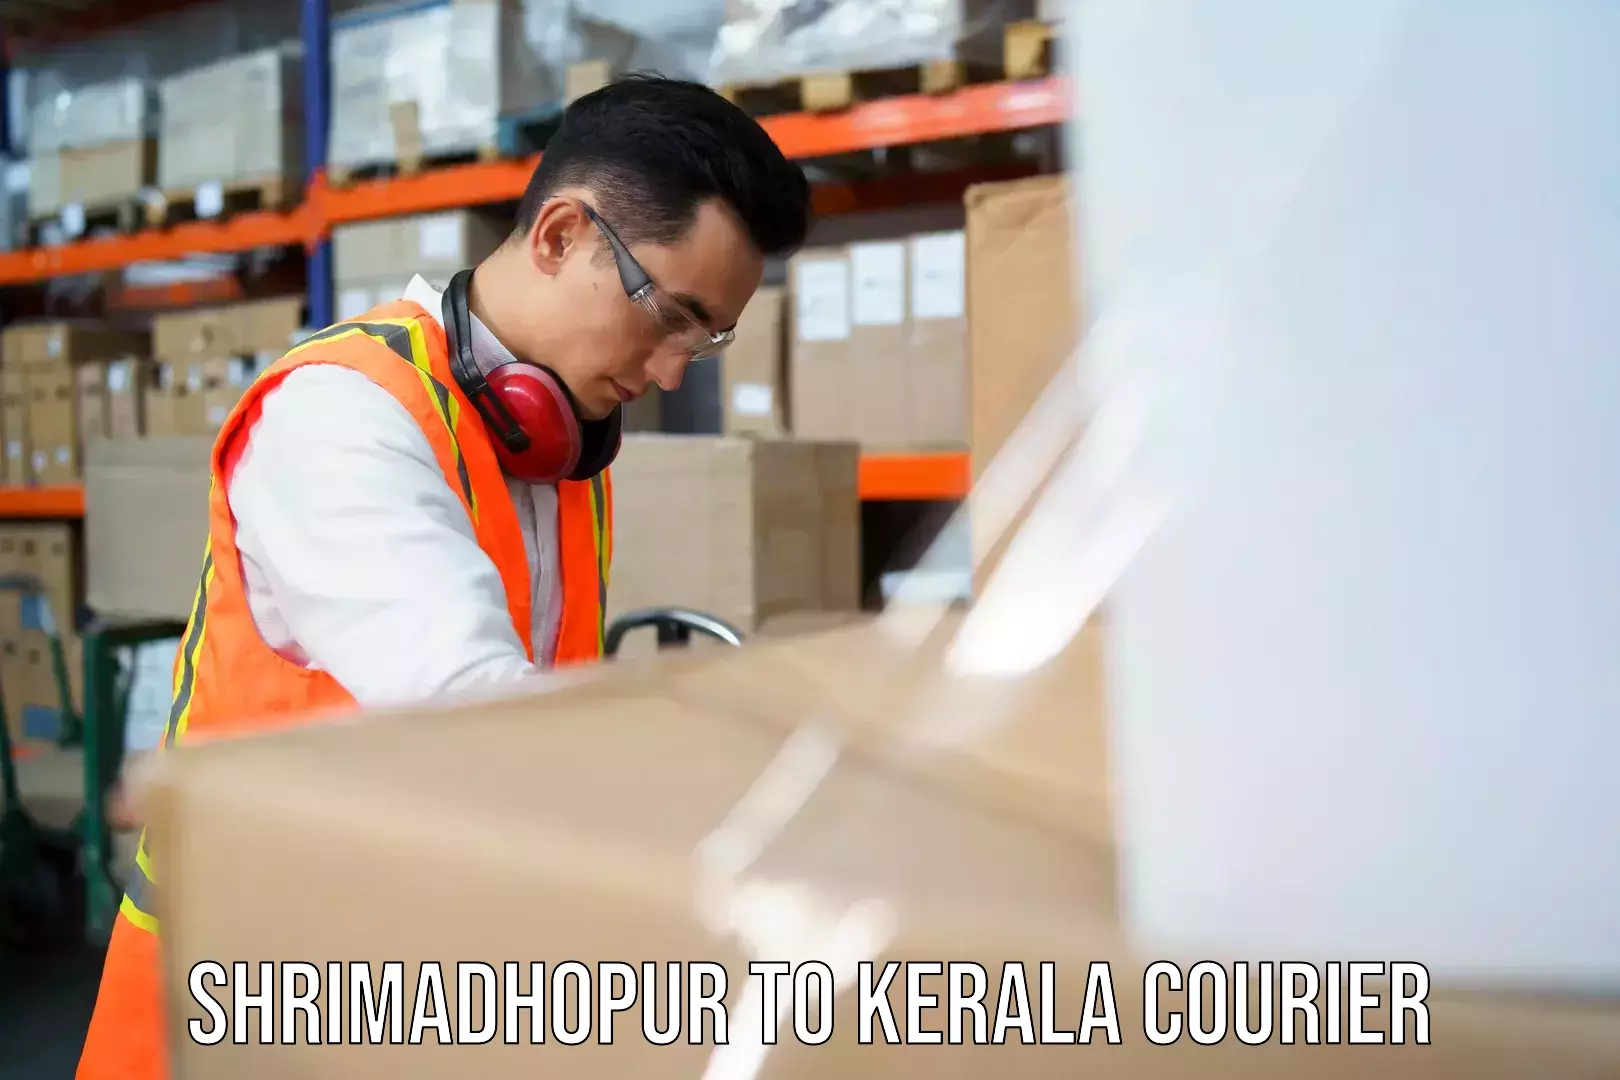 Modern delivery methods Shrimadhopur to Attingal